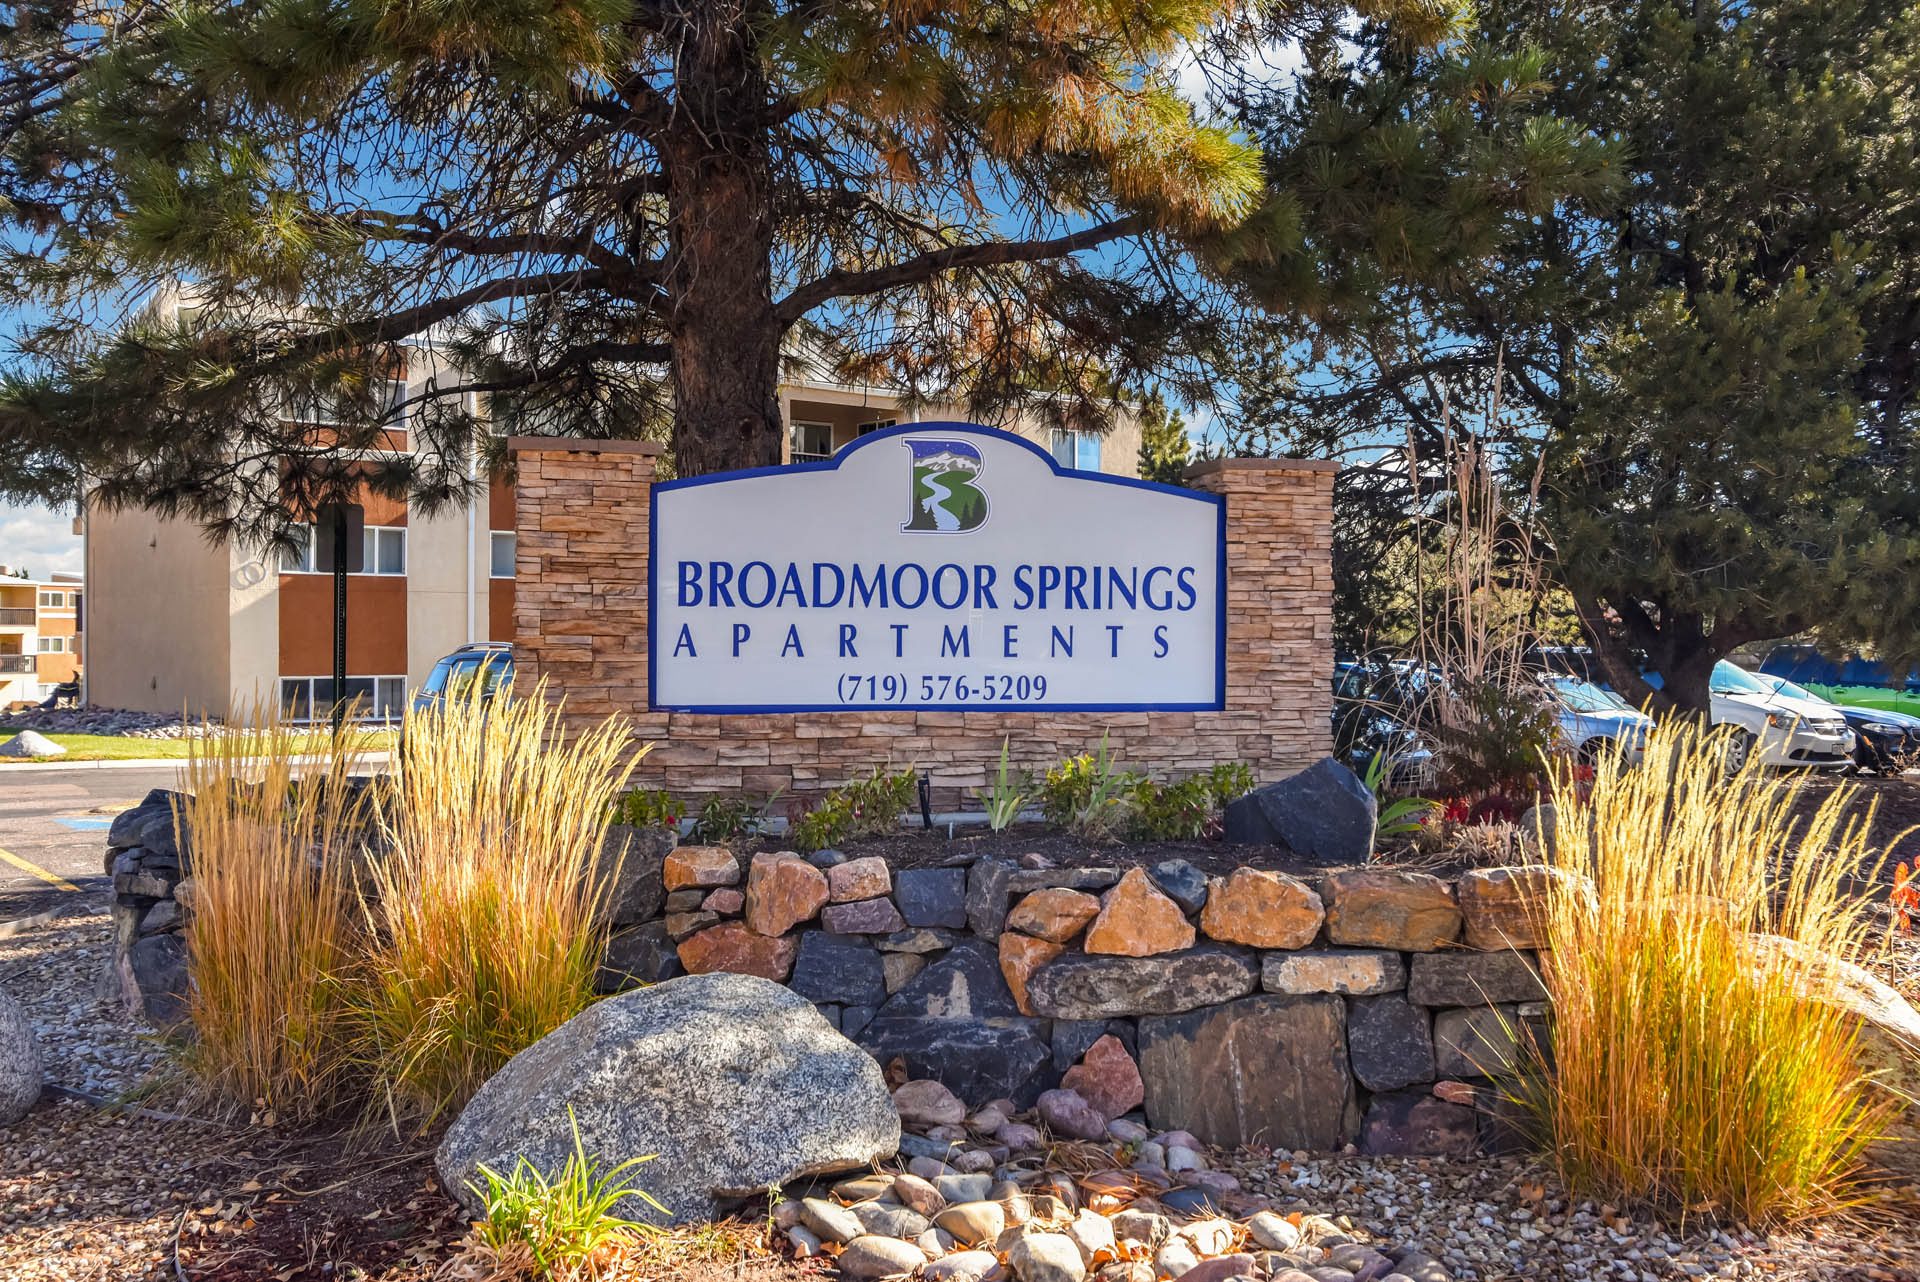 Property Signage at Broadmoor Springs, Colorado